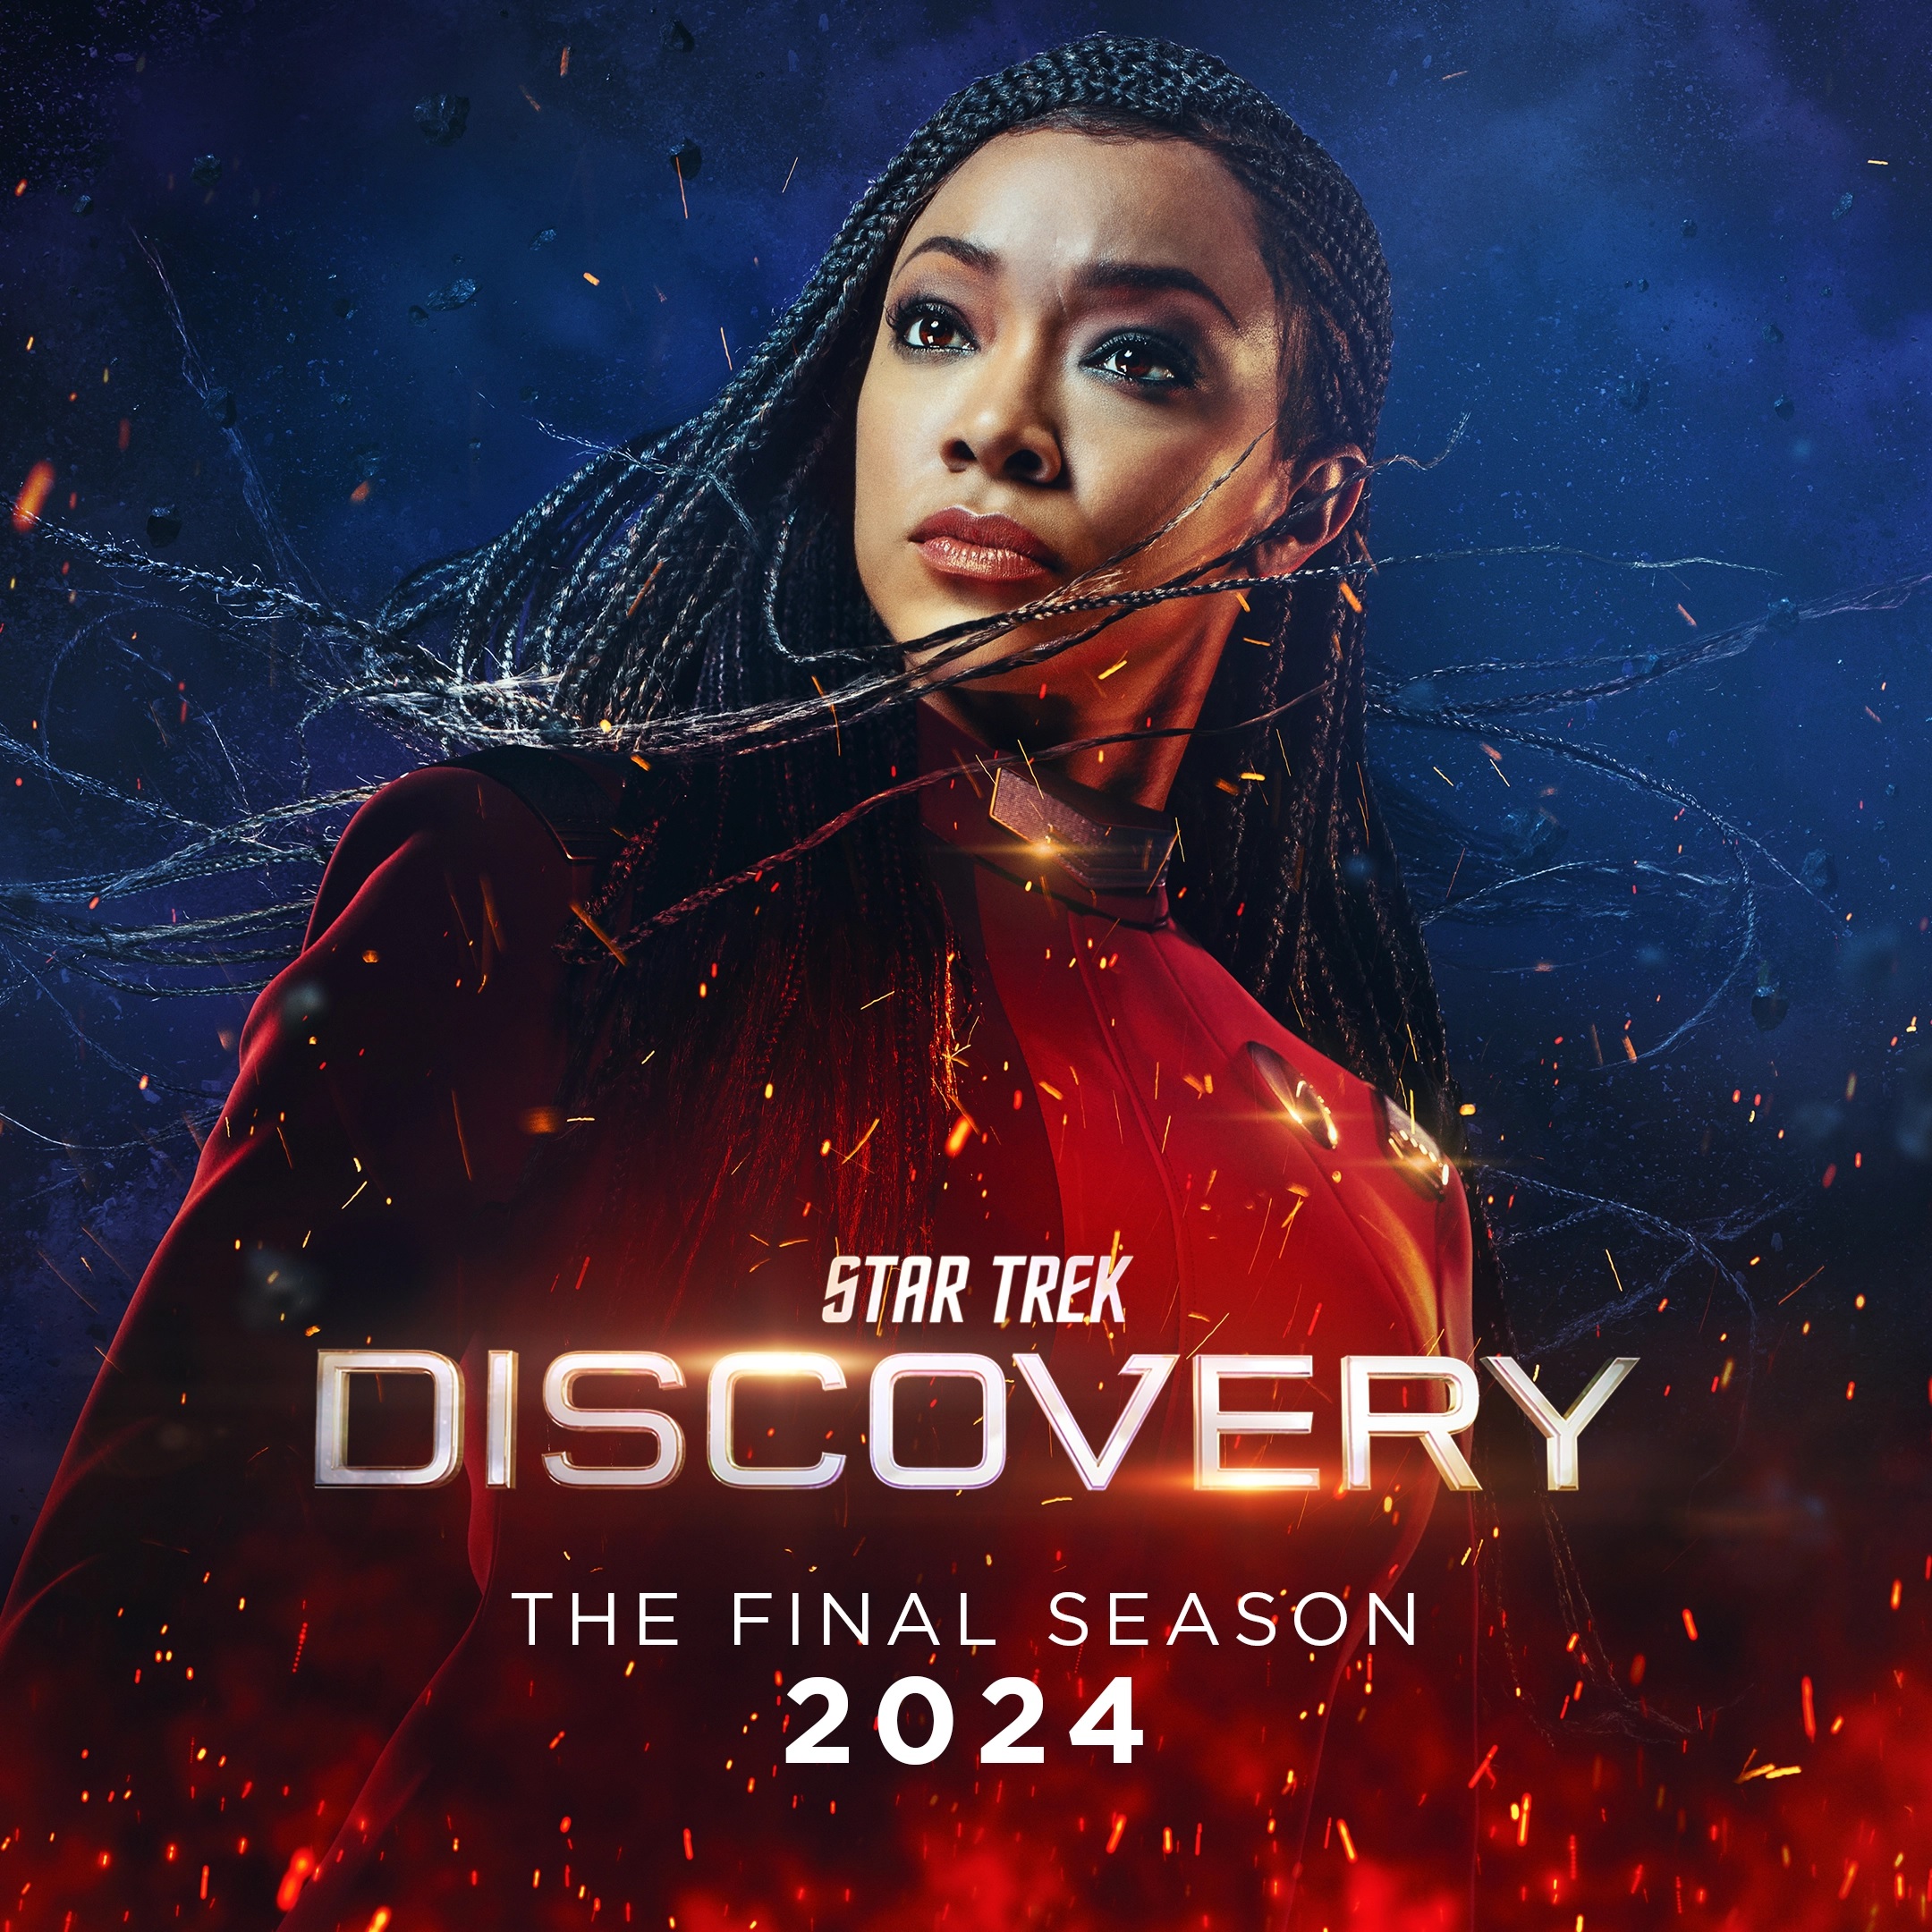 star trek discovery season 5 premiere date